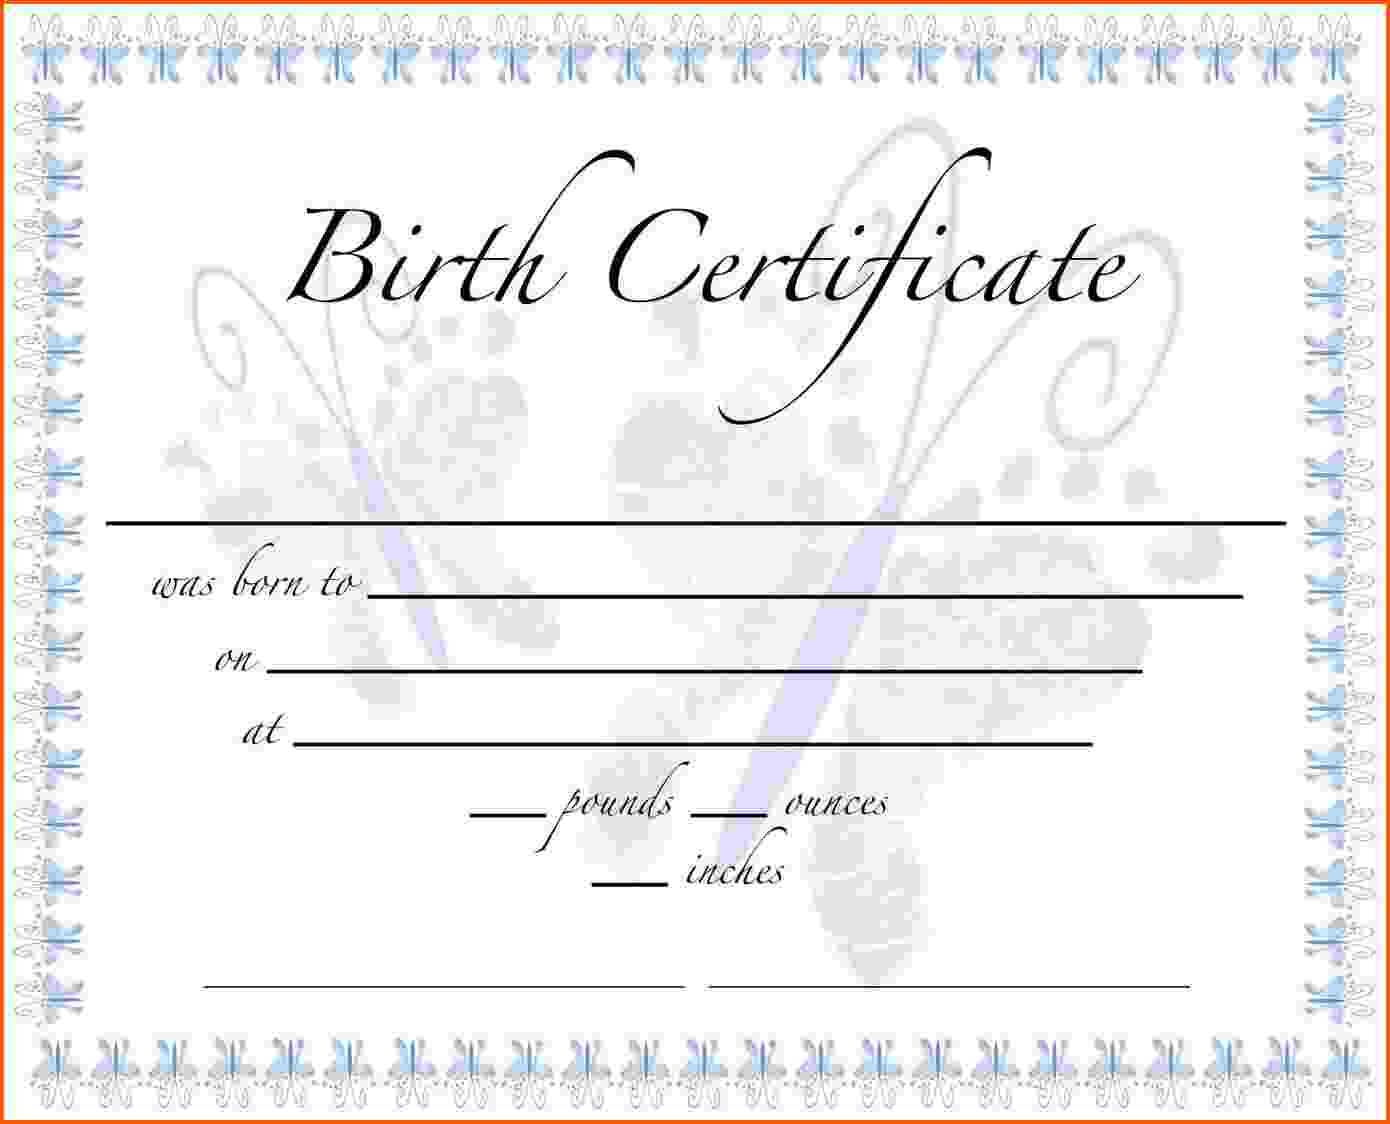 9+ Birth Certificate Templates | Survey Template Words For Birth Certificate Templates For Word